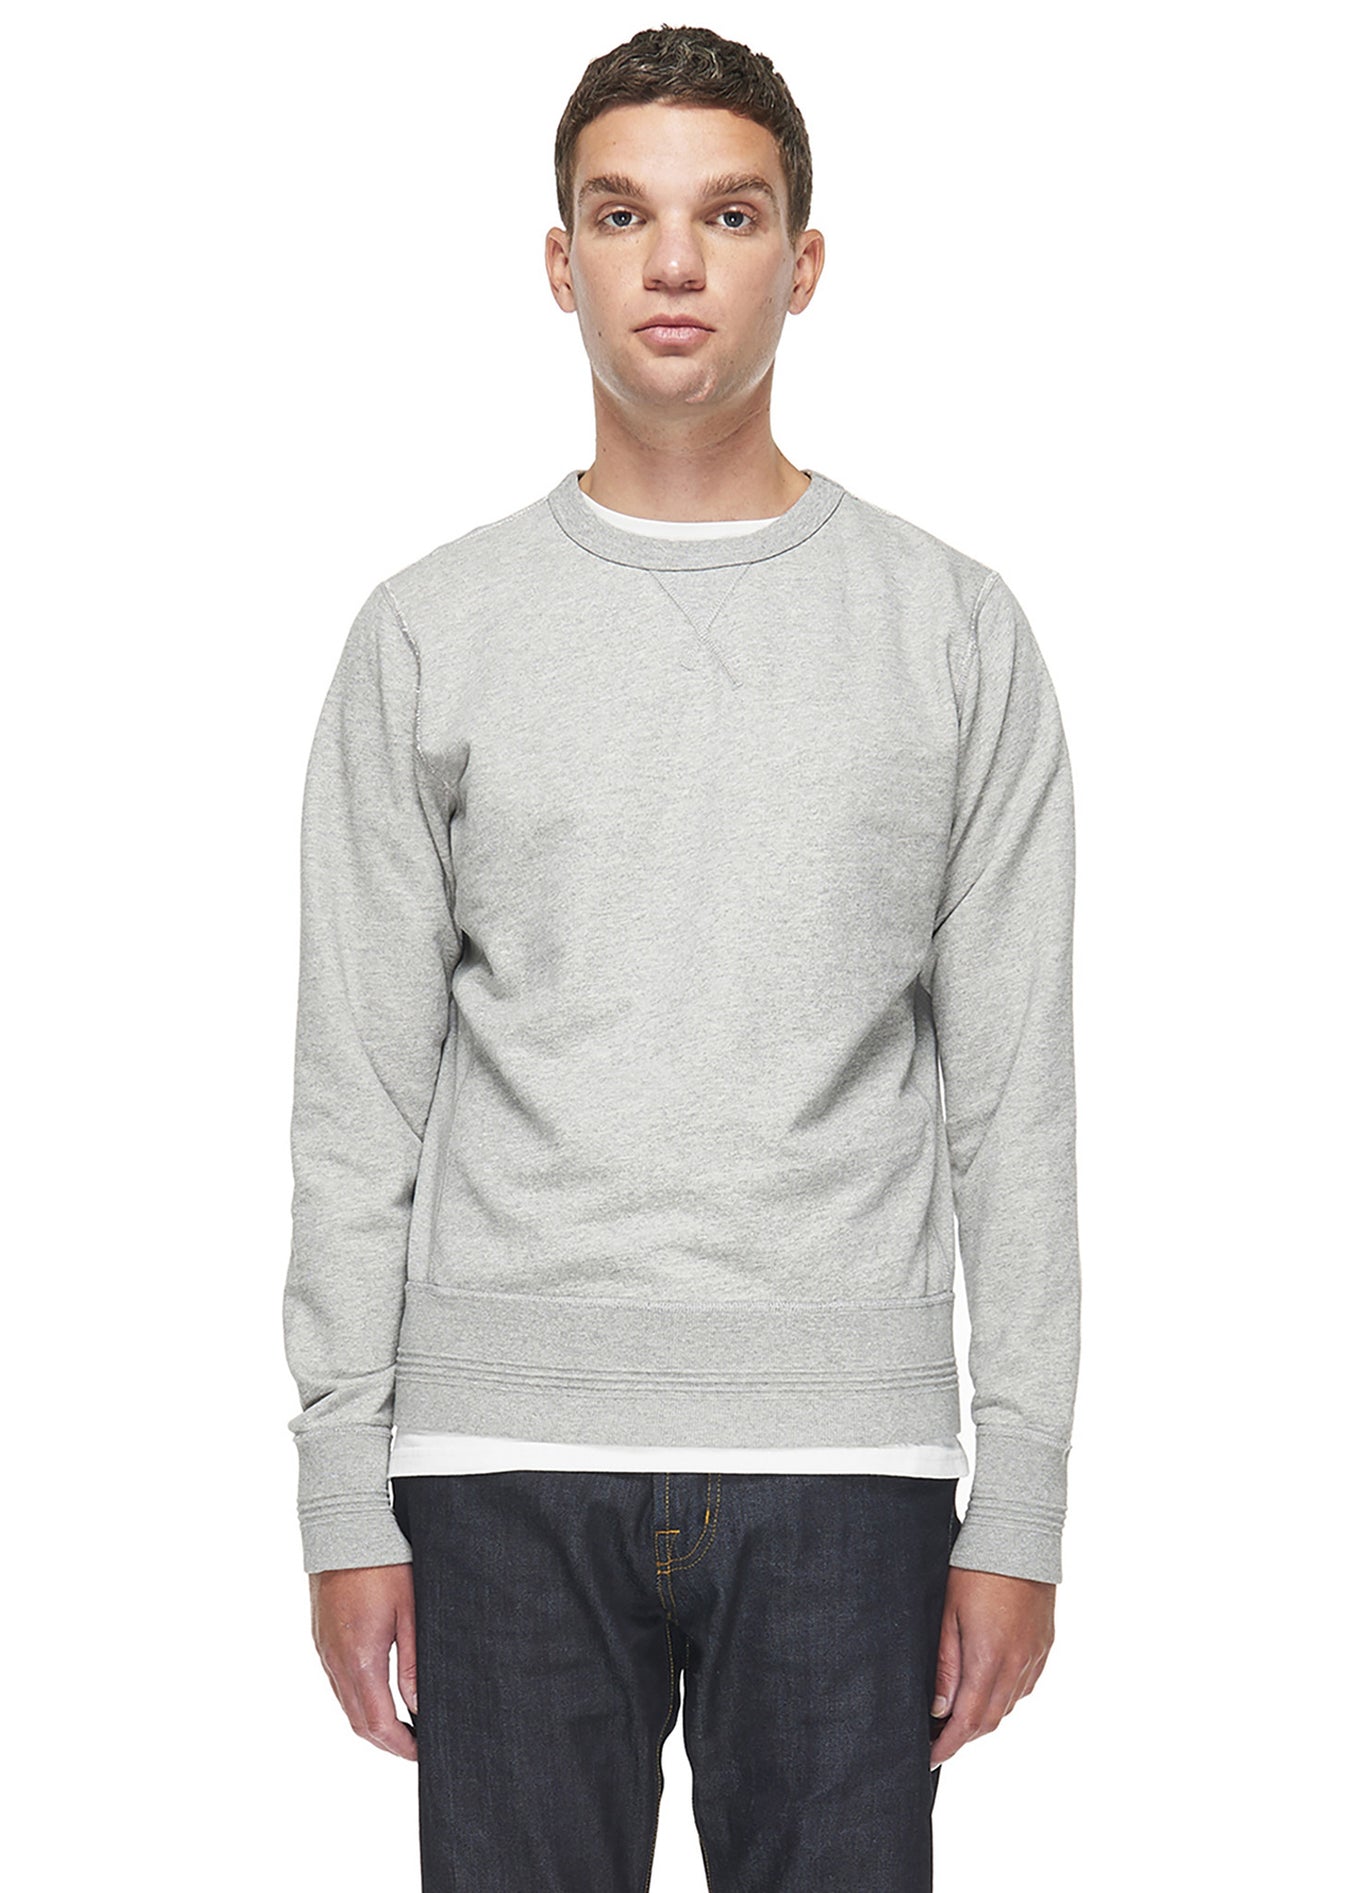 albam Clothing Sweatshirt in Grey Marl